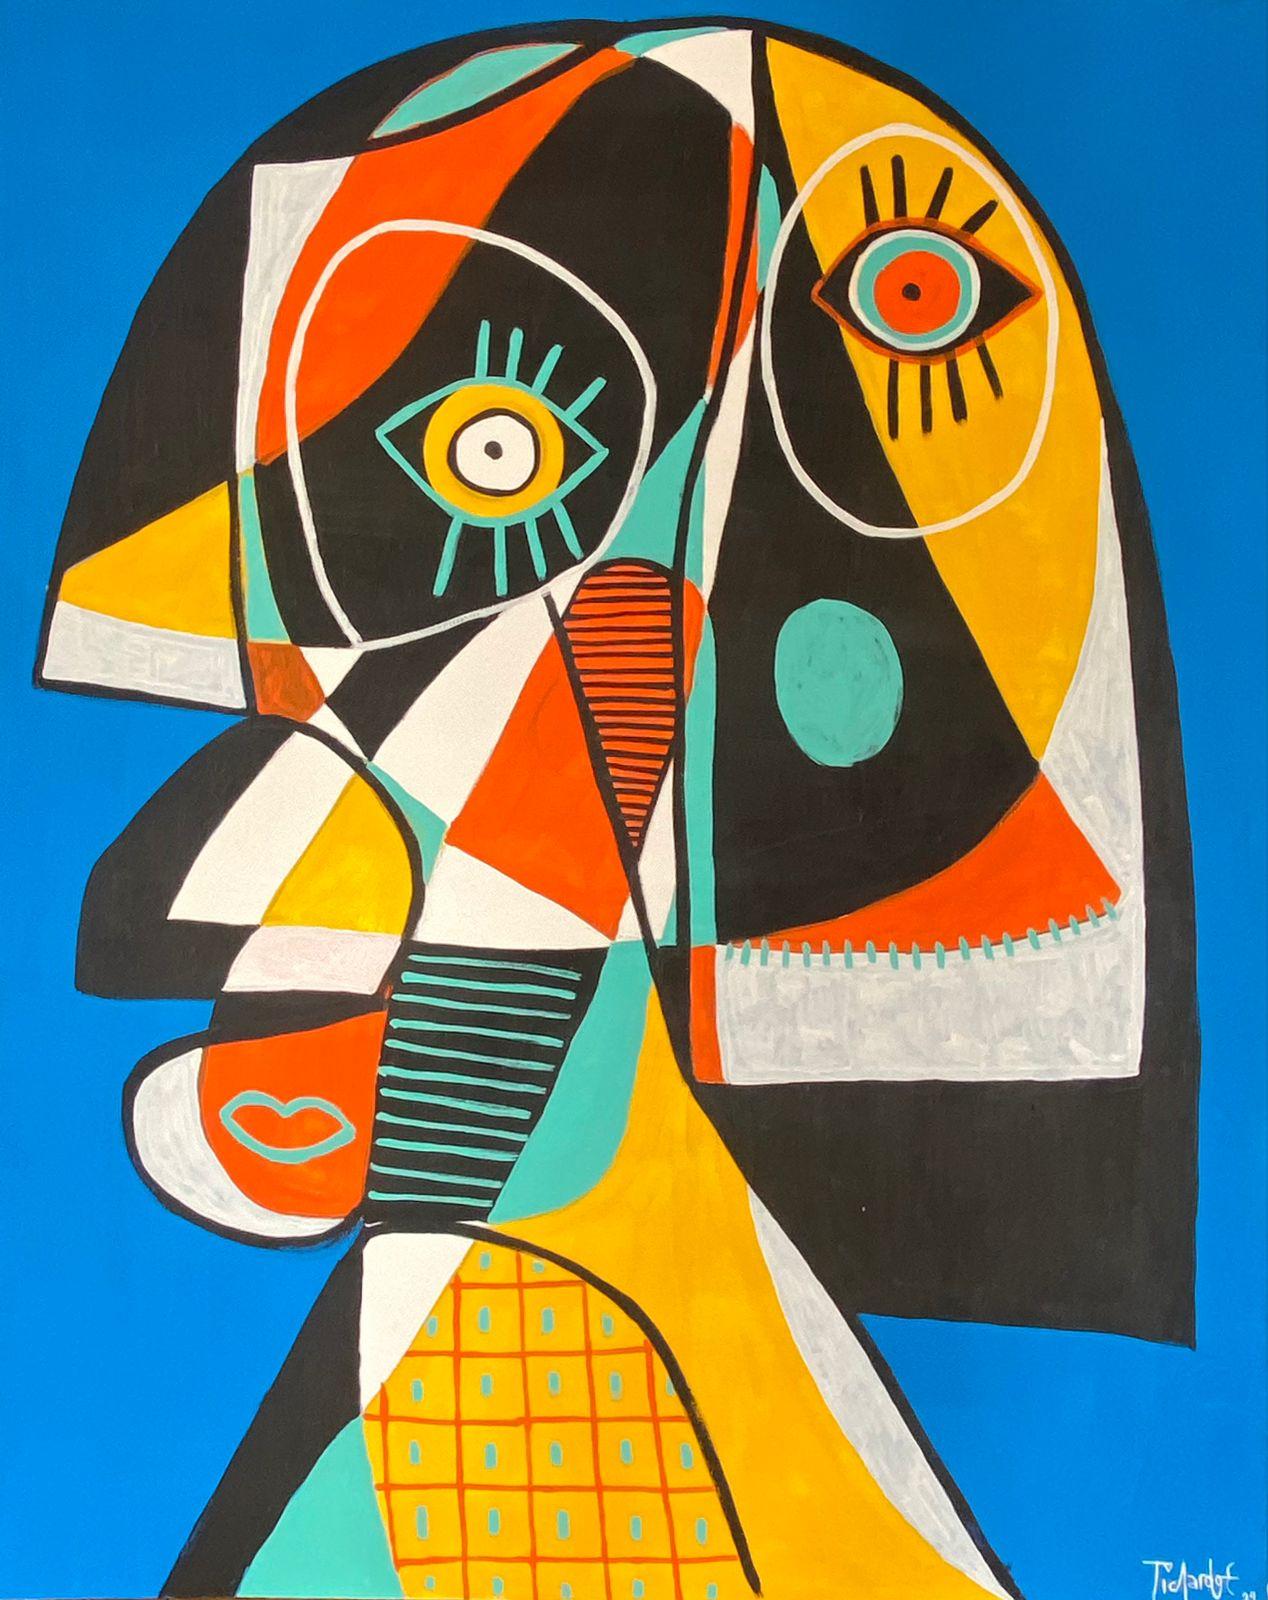 Contemporary Art, Abstract Painting
Acrylic on canvas
152x122cm
Signed 




About the artist
Enrique Pichardo (Mexico City, 1973) graduated from Escuela Nacional de Pintura, Escultura y Grabado (ENPEG) “La Esmeralda”. As a Mexican Contemporary